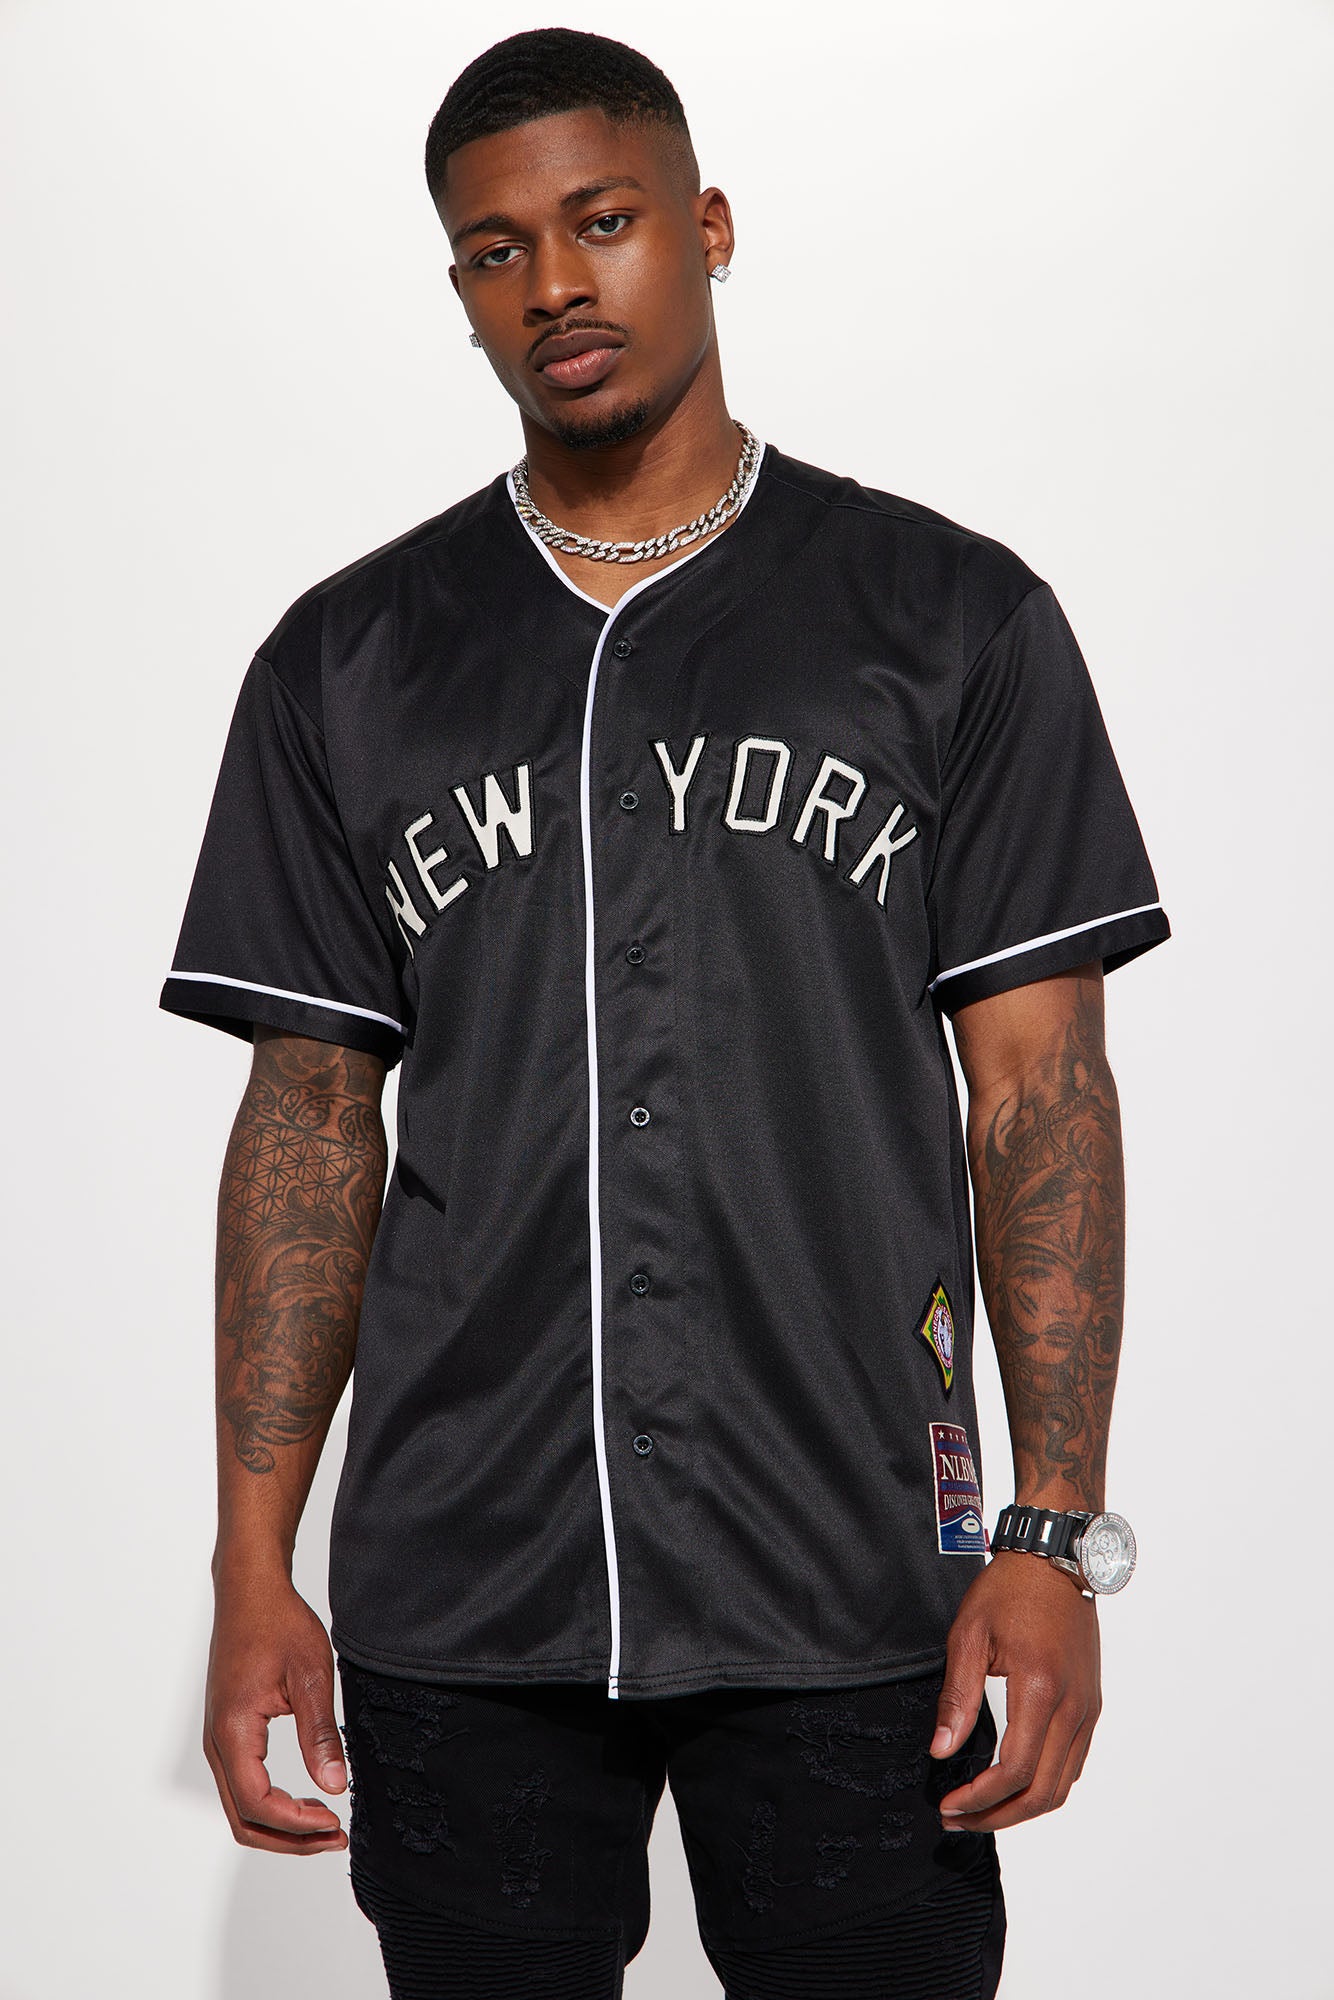 New York Black Yankees NLB Jersey, XL / Cream